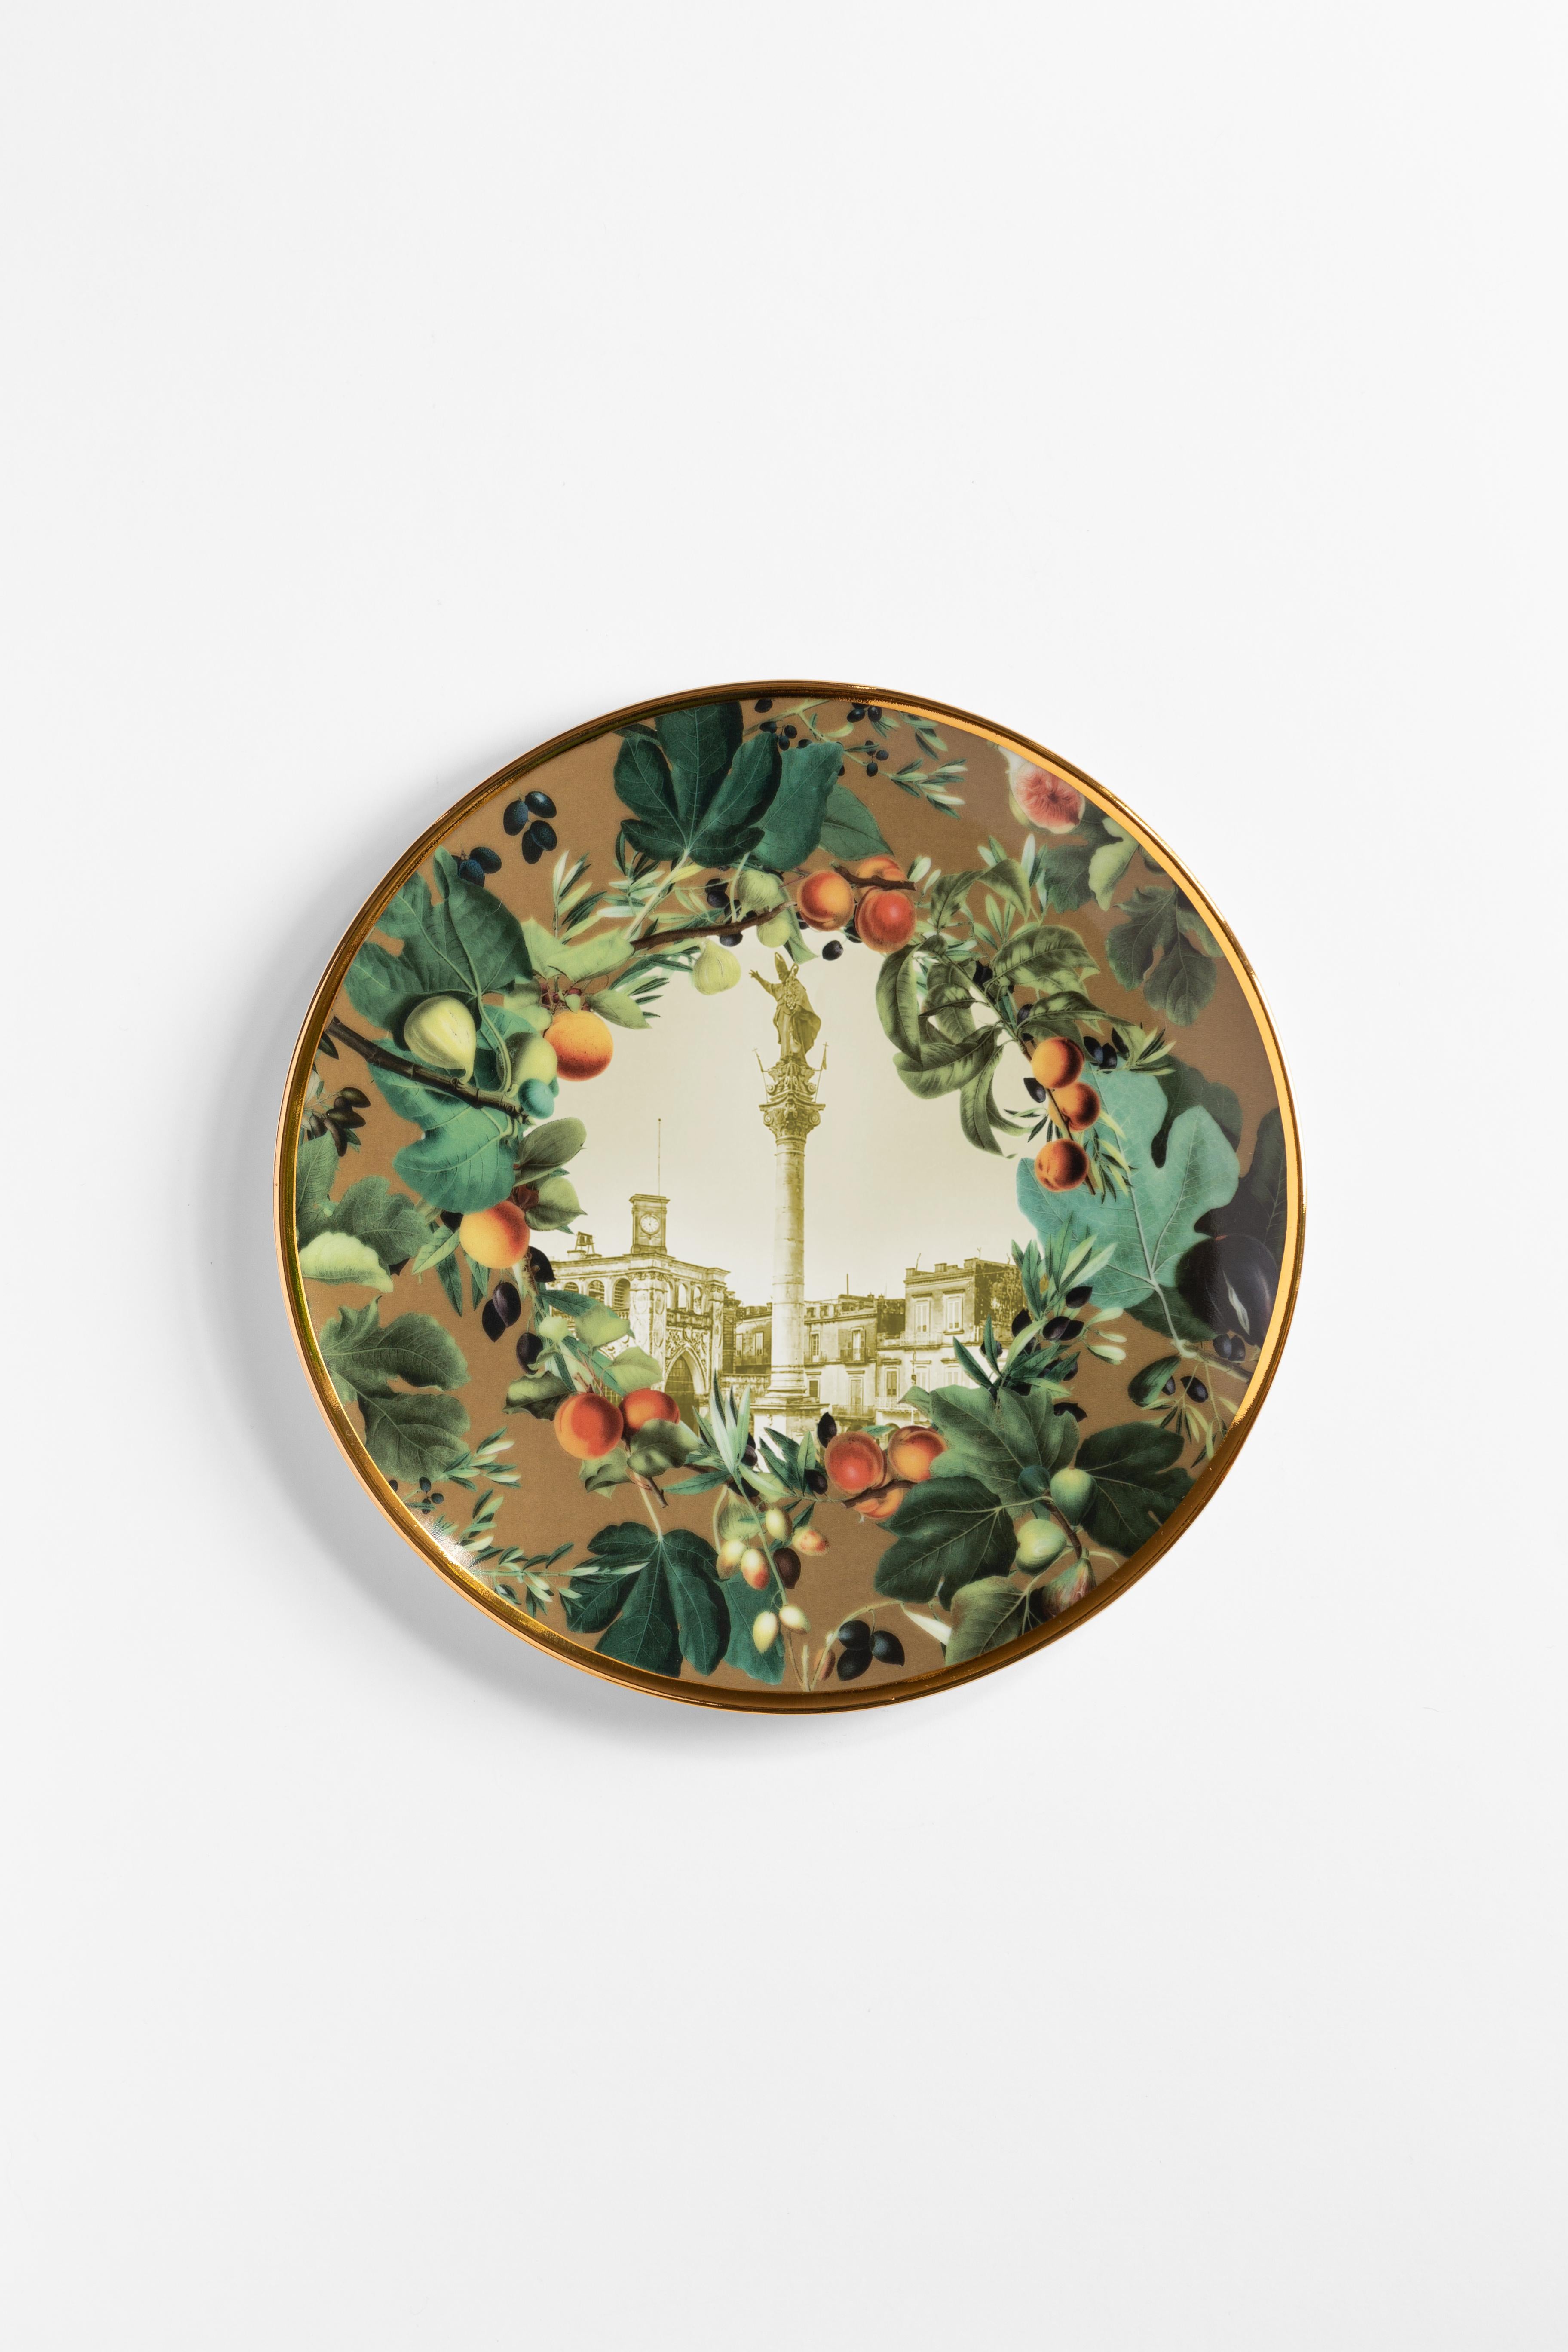 Apulia, Seven Contemporary Porcelain Dessert Plates with Decorative Design For Sale 3